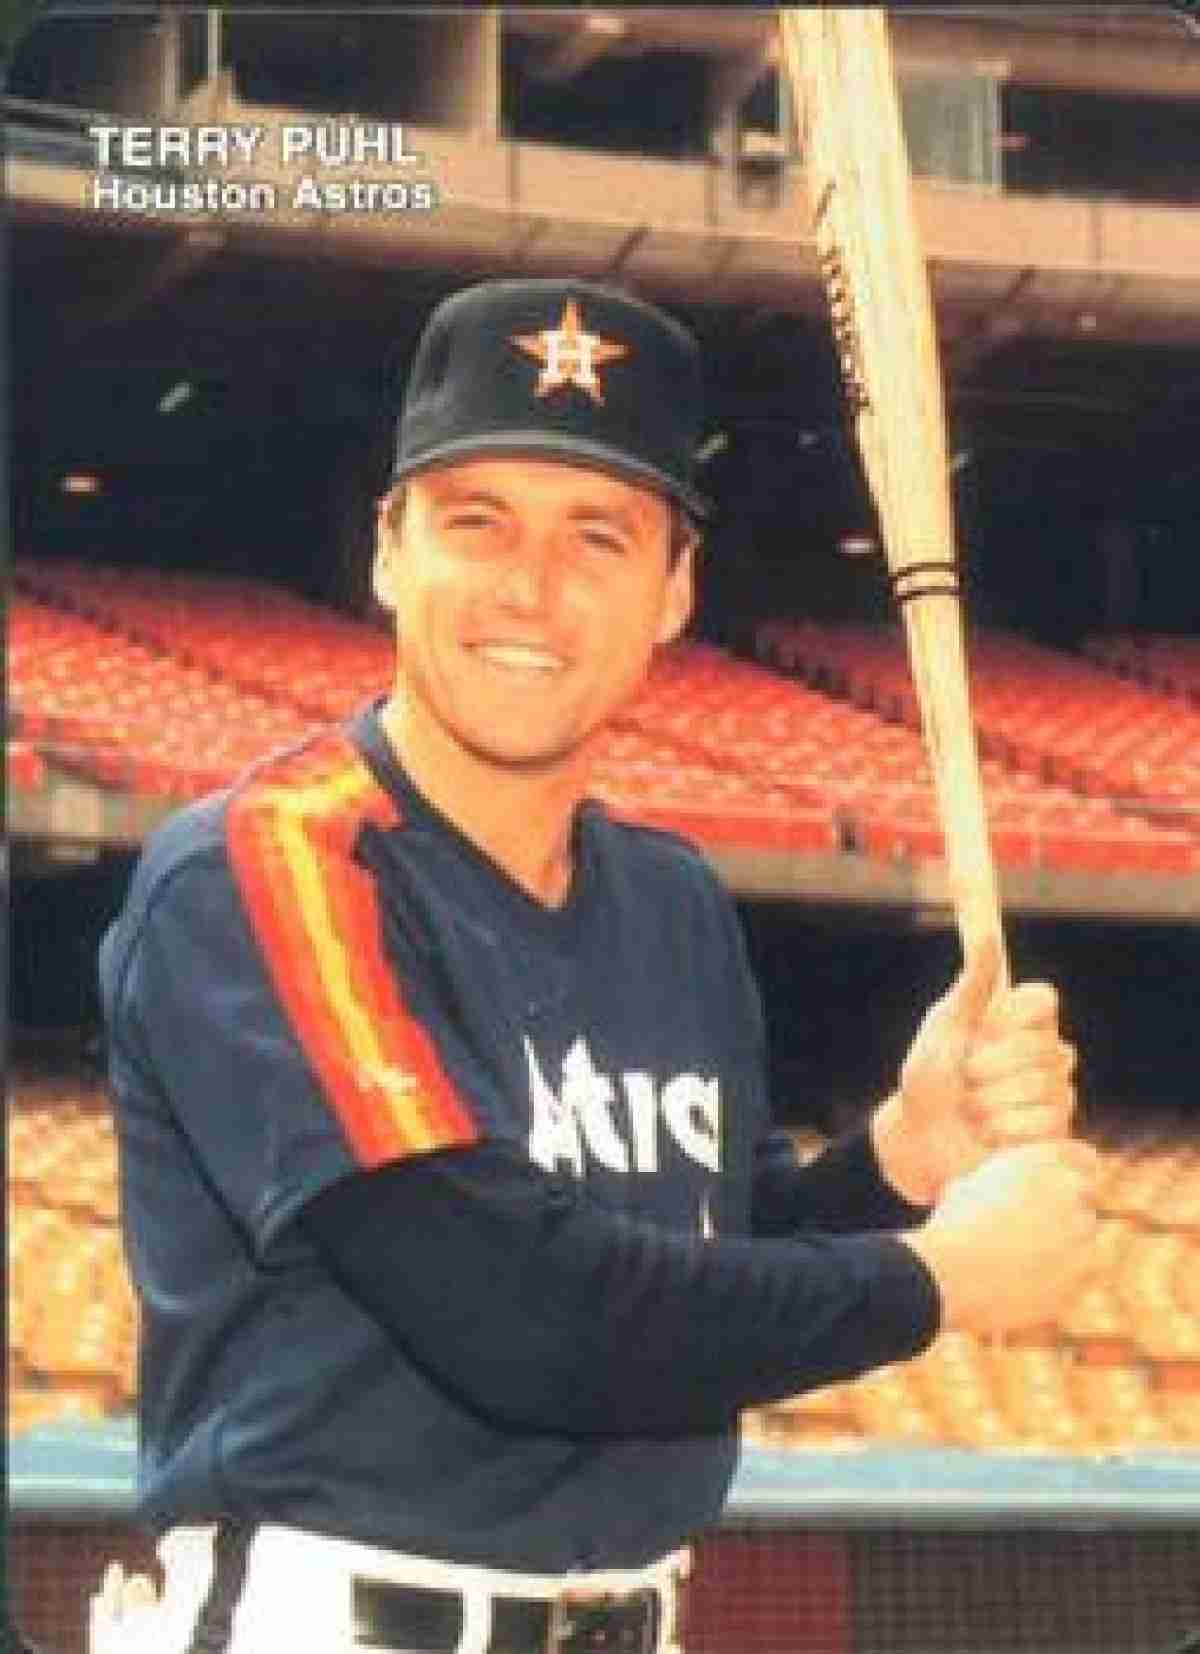 Terry Puhl - Astros #473 Score 1990 Baseball Trading Card